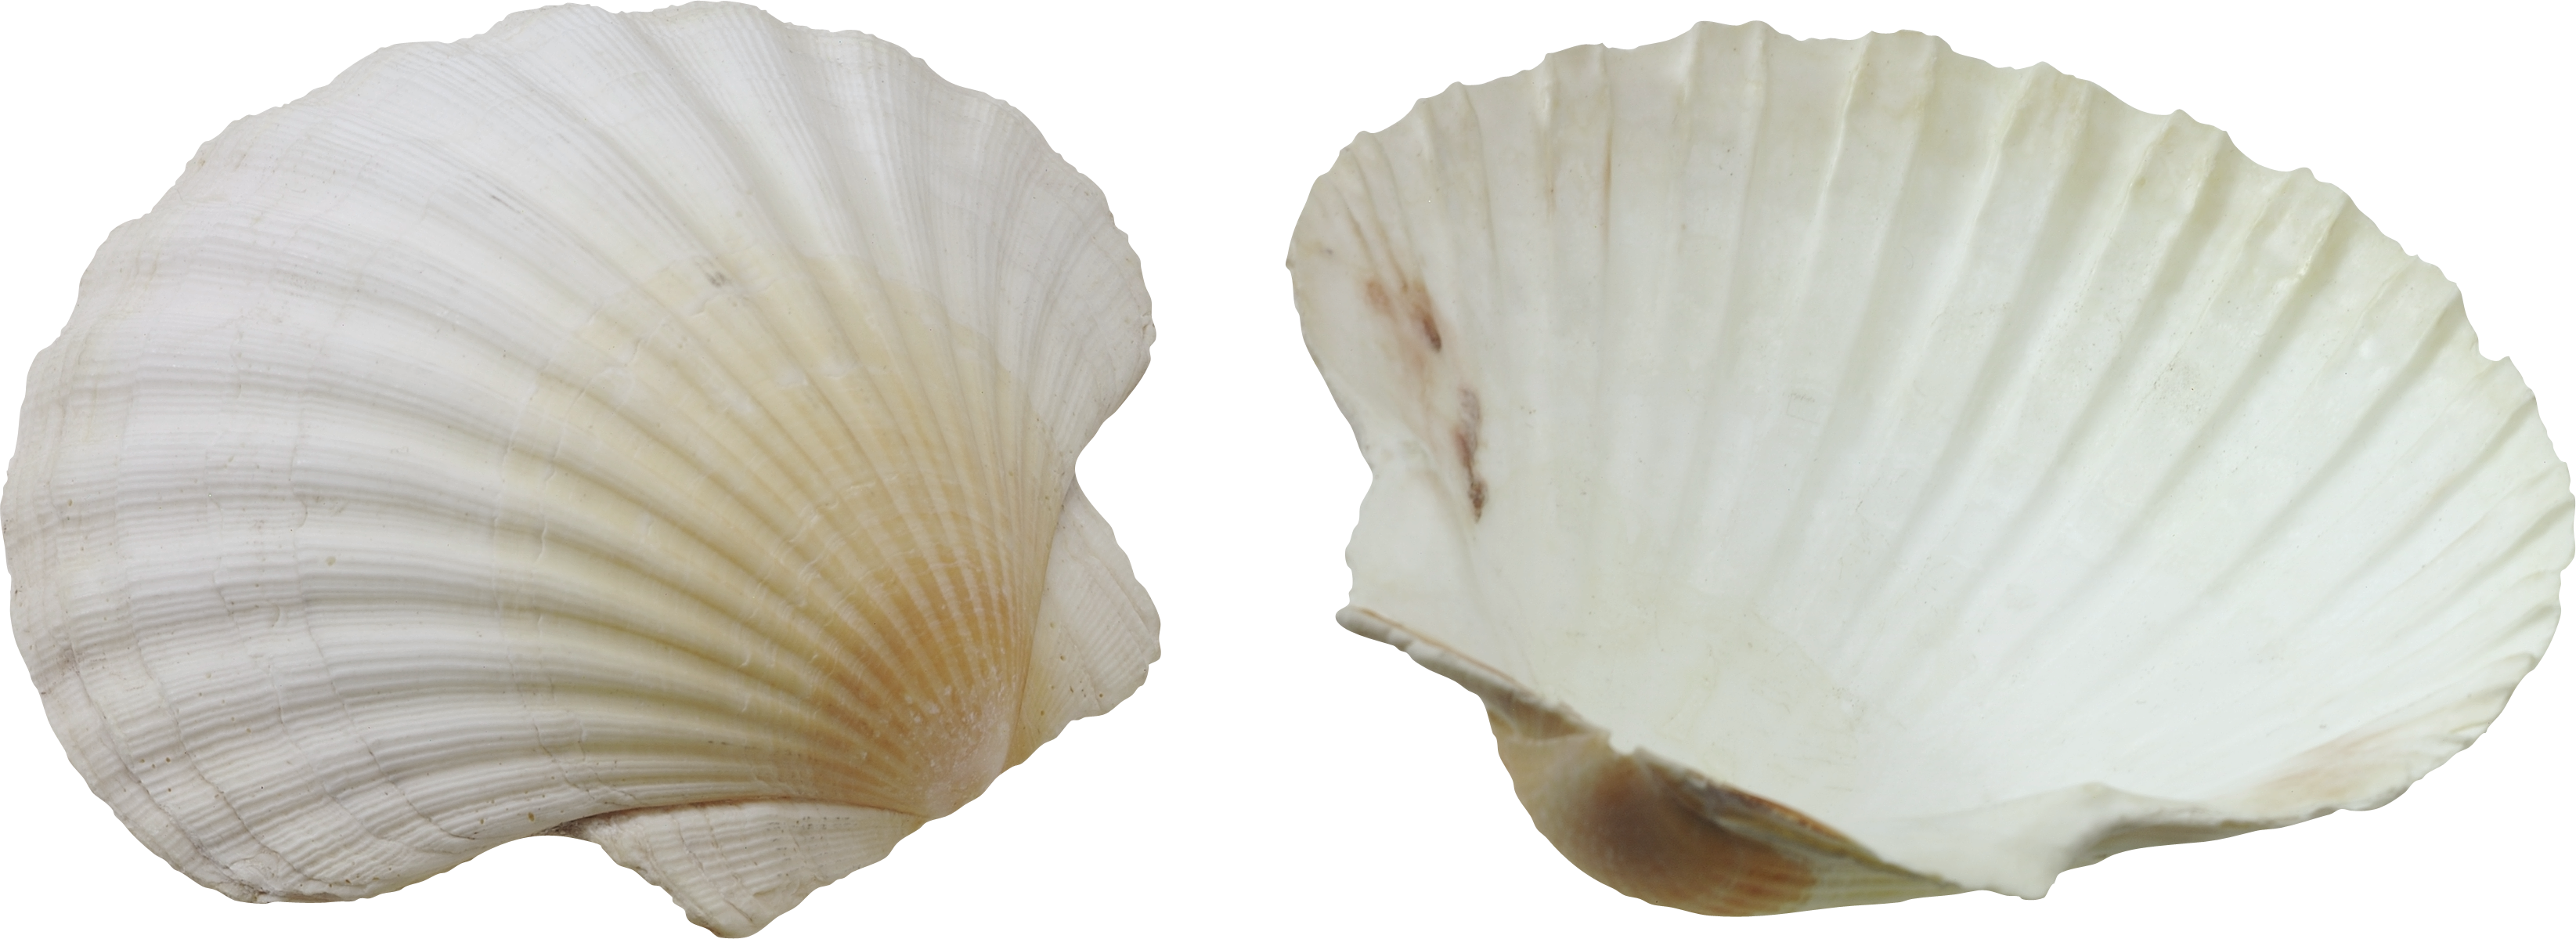 Seashell Png - Seashell (3290x1199), Png Download